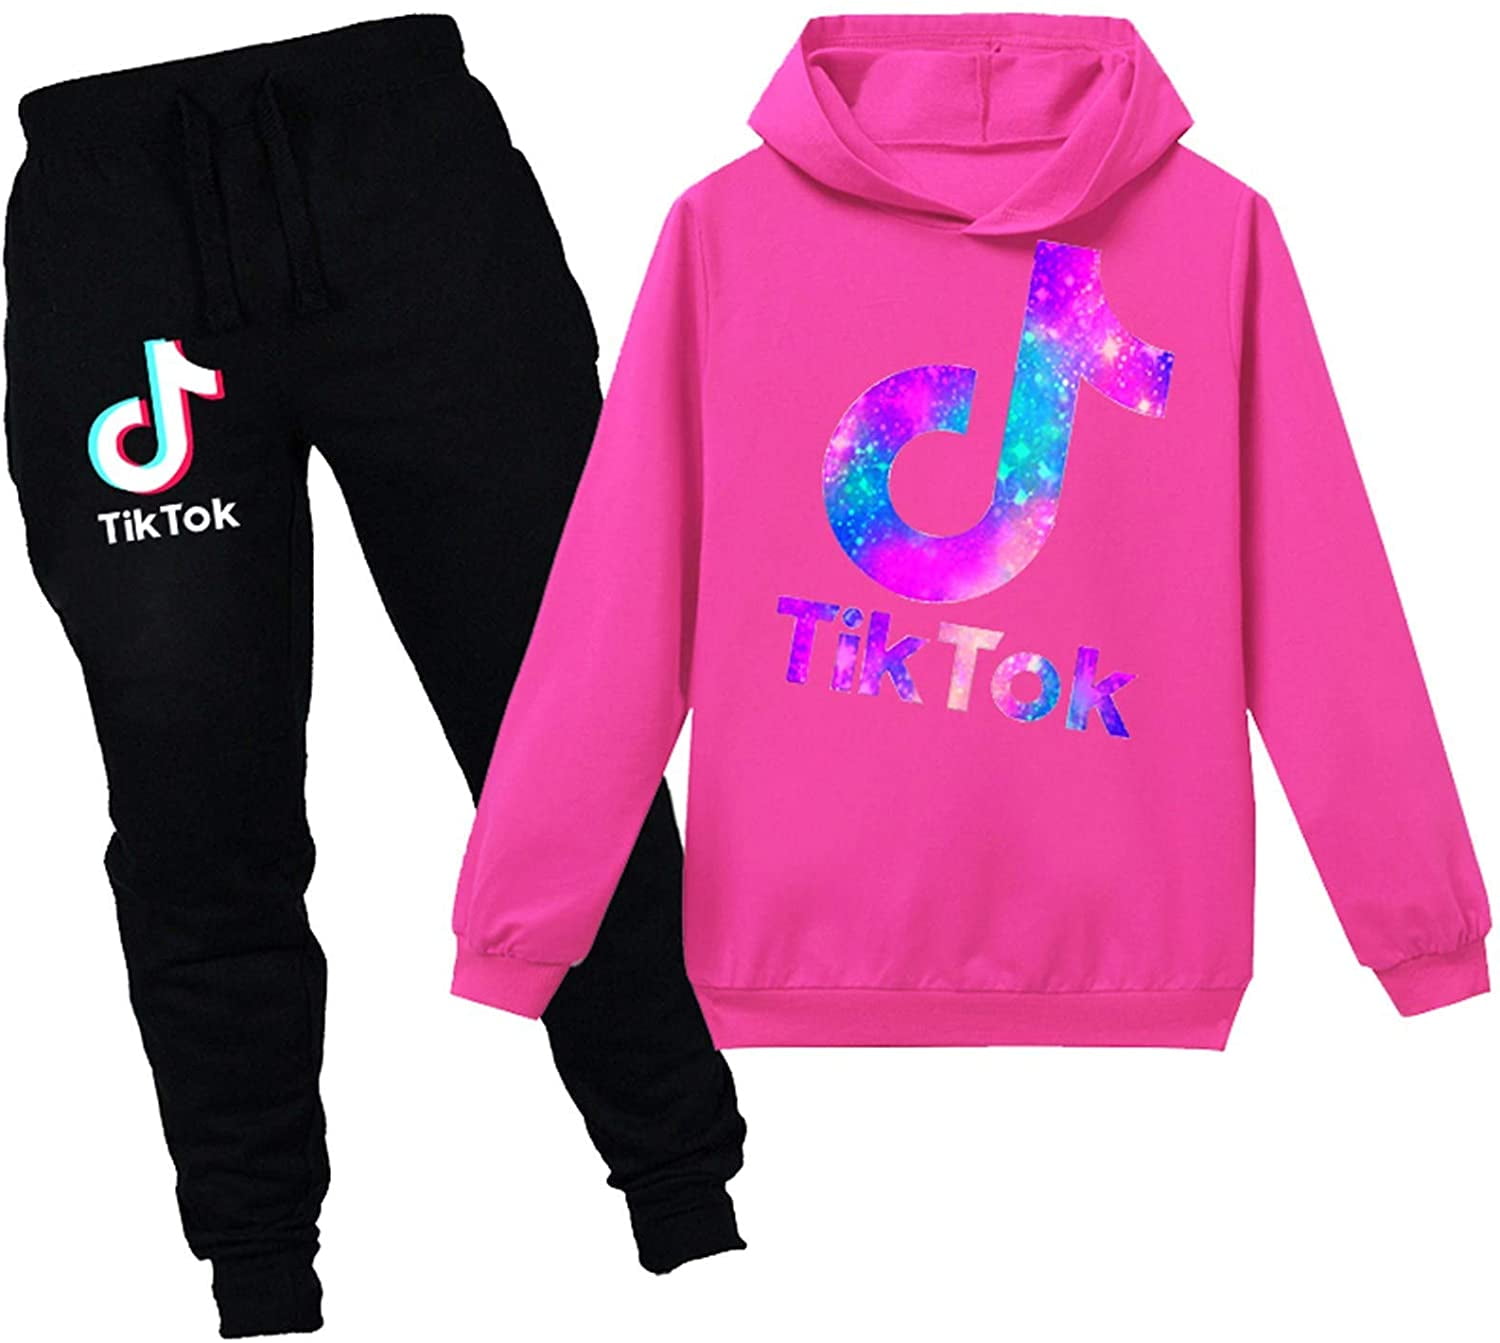 Tik Tok Pullover Hoodie Set Casual Novelty Sweatshirt 2 Piece Fashion Tik Tok Clothes for Girls Boys 